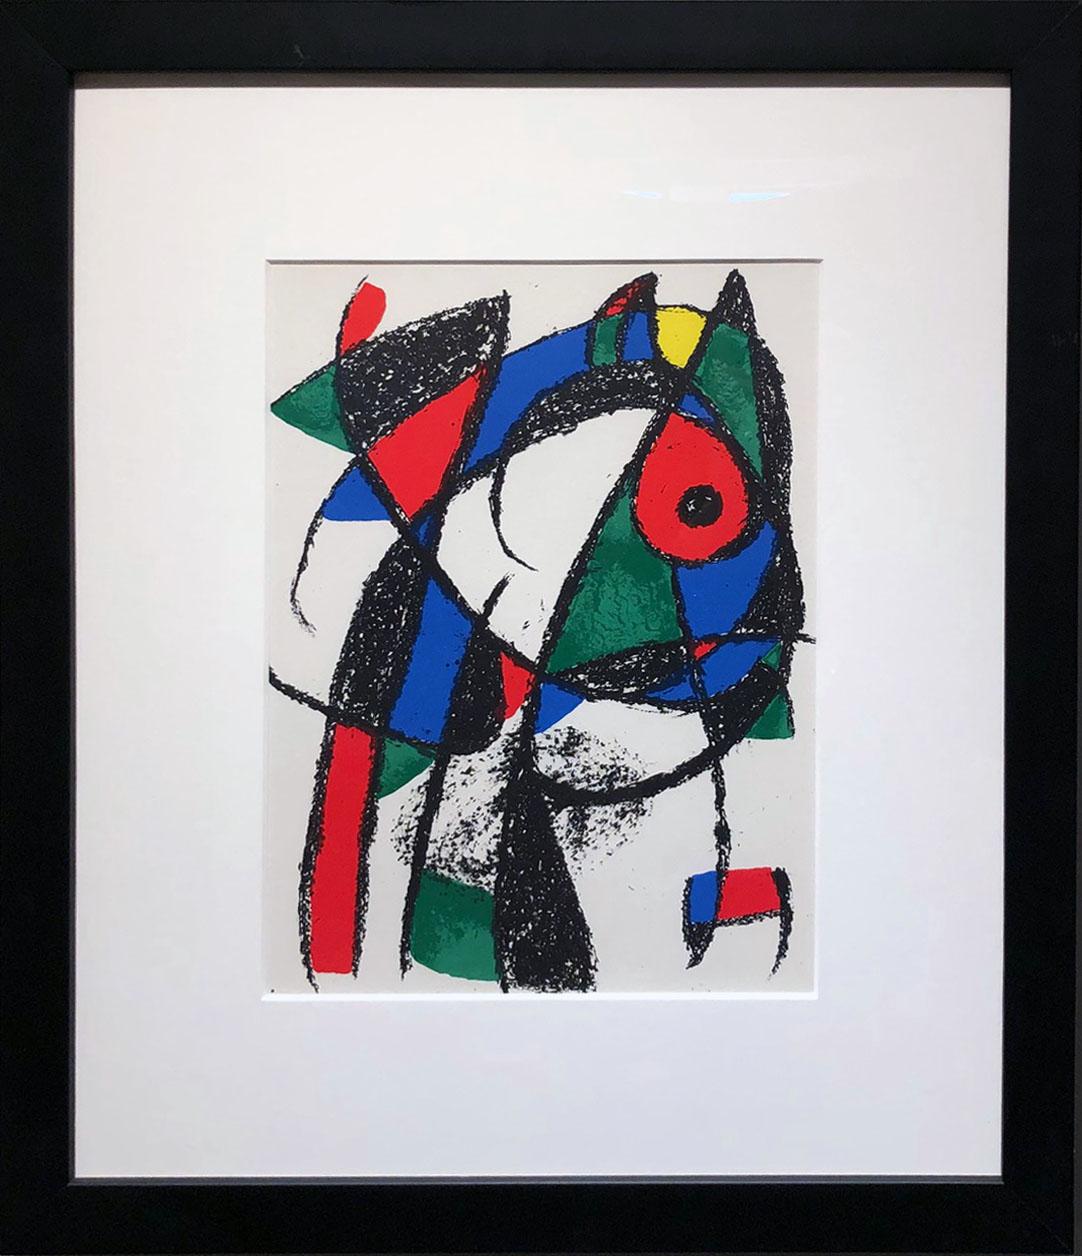 Untitled I - Print by Joan Miró